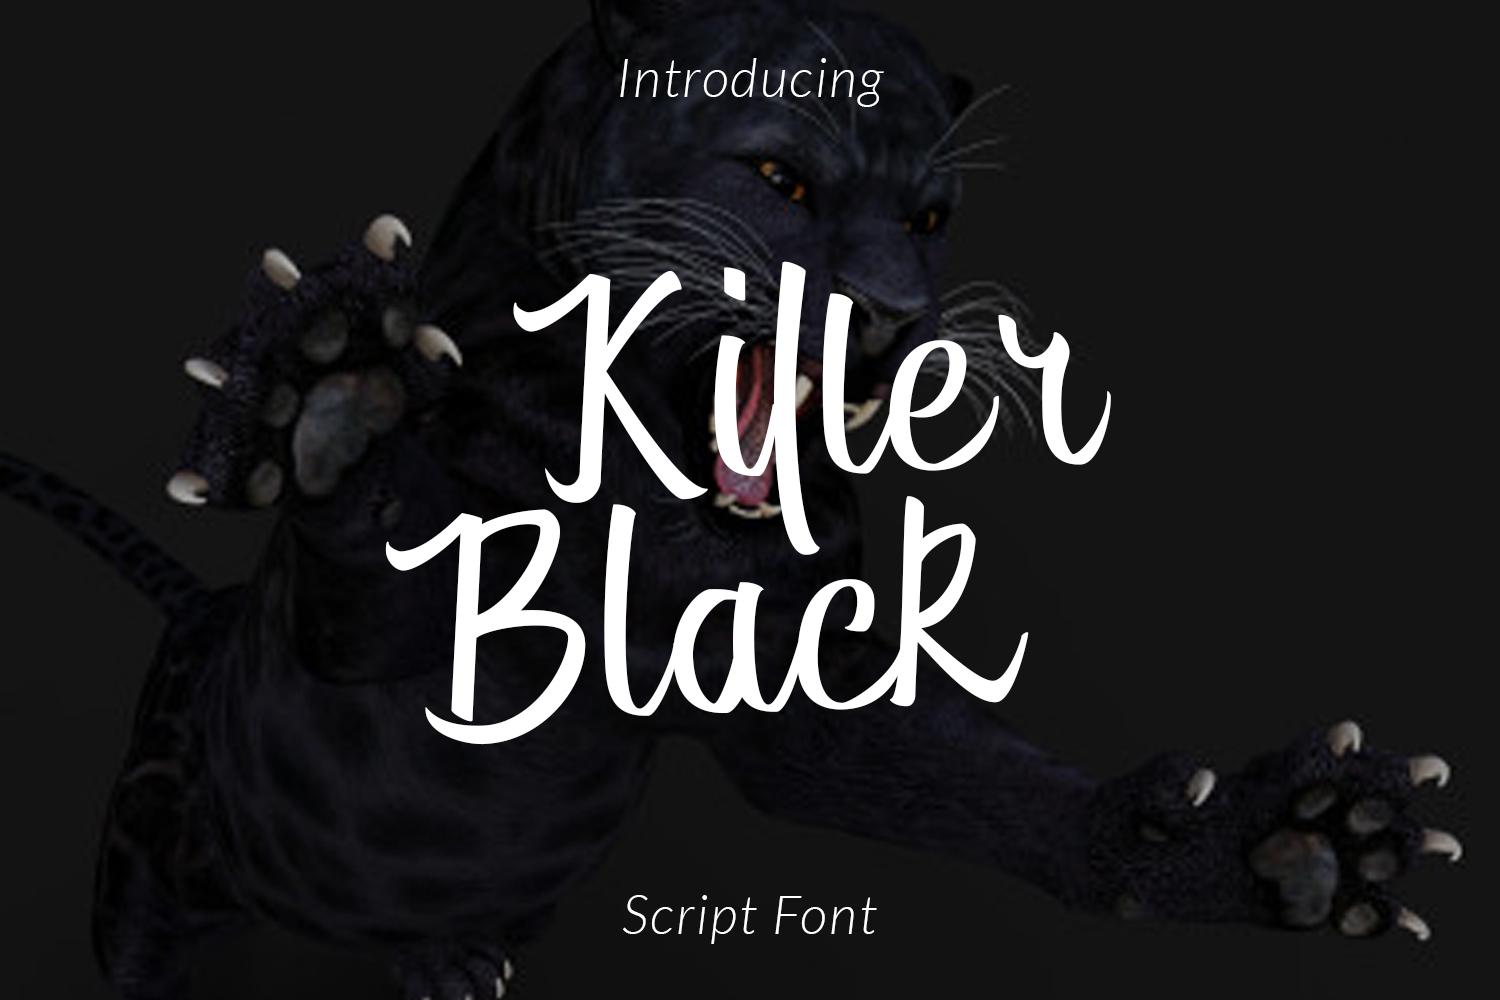 Killer Black Font